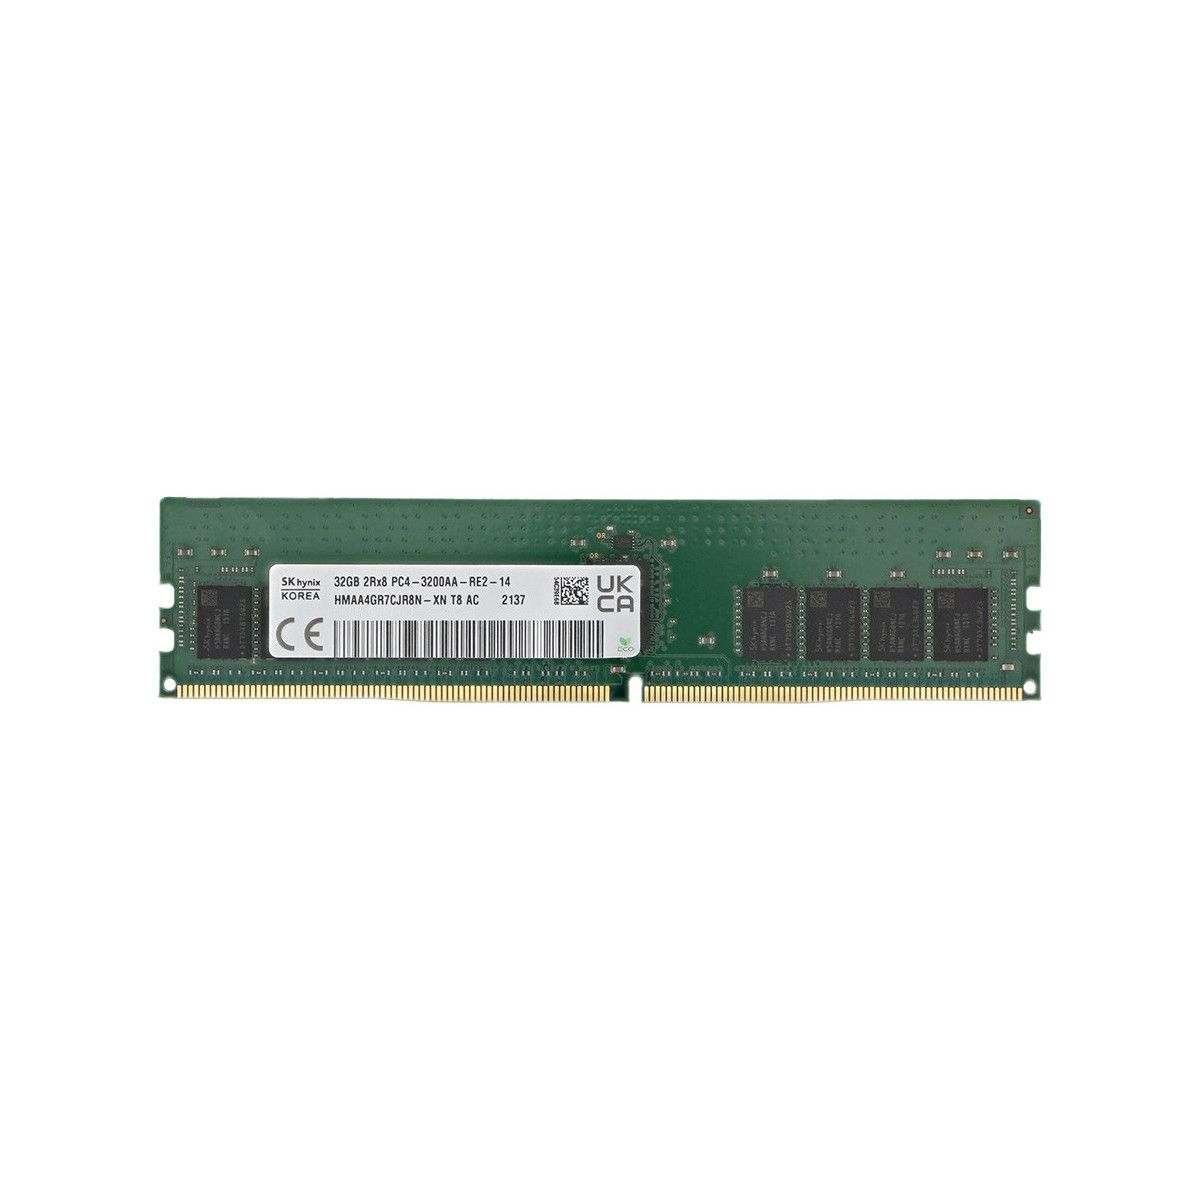 P11445-1A1-MS - Memstar 1x 32GB DDR4-3200 RDIMM PC4-25600R - Mem-star OEM compatibile Memoria 1 - Memstar 